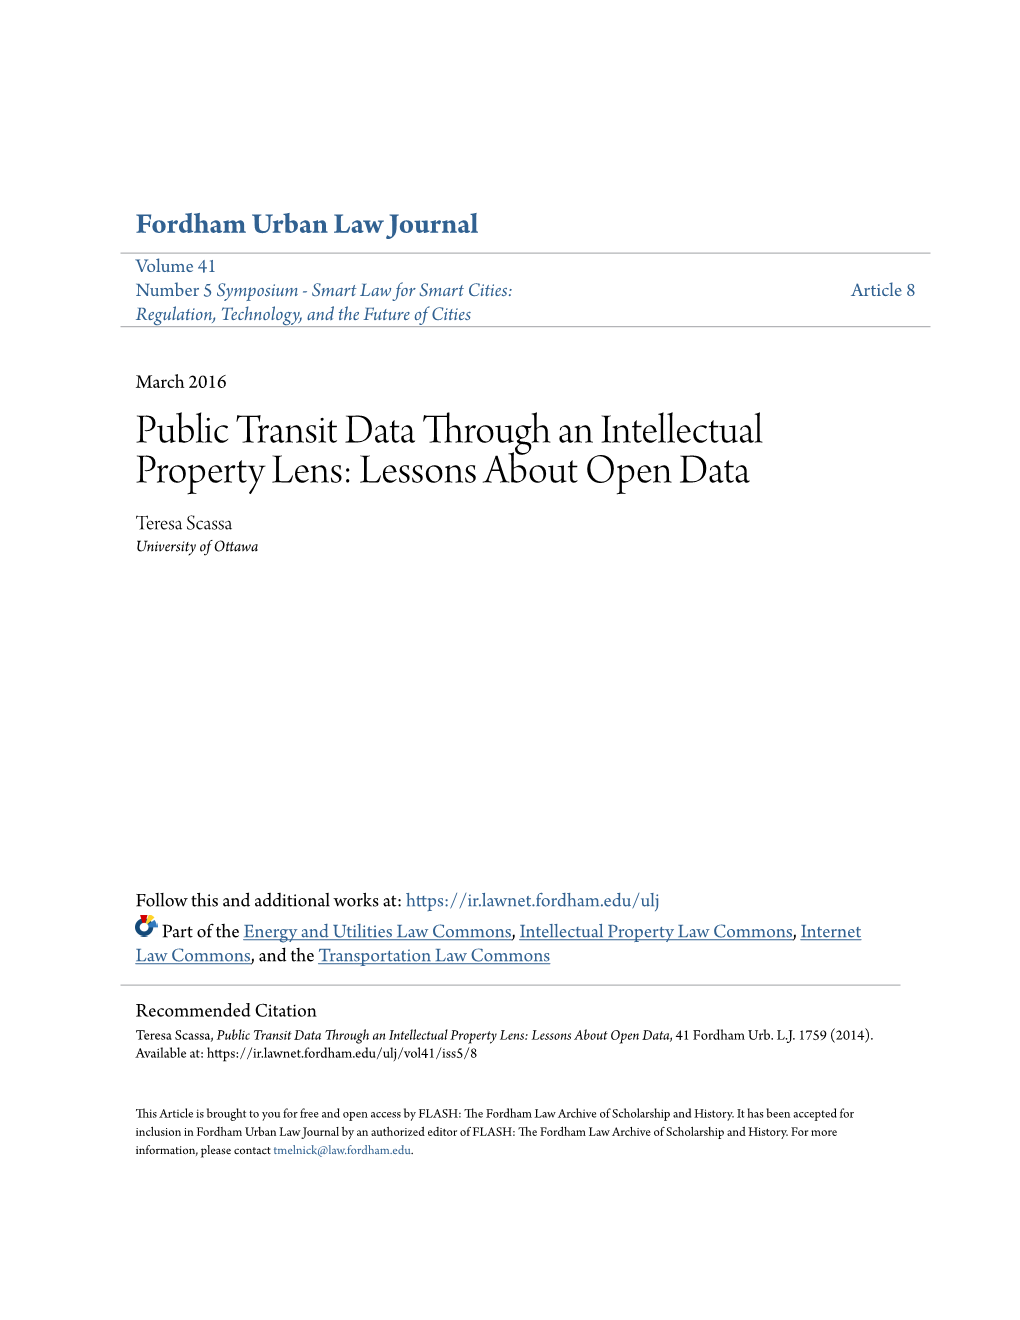 Public Transit Data Through an Intellectual Property Lens: Lessons About Open Data Teresa Scassa University of Ottawa